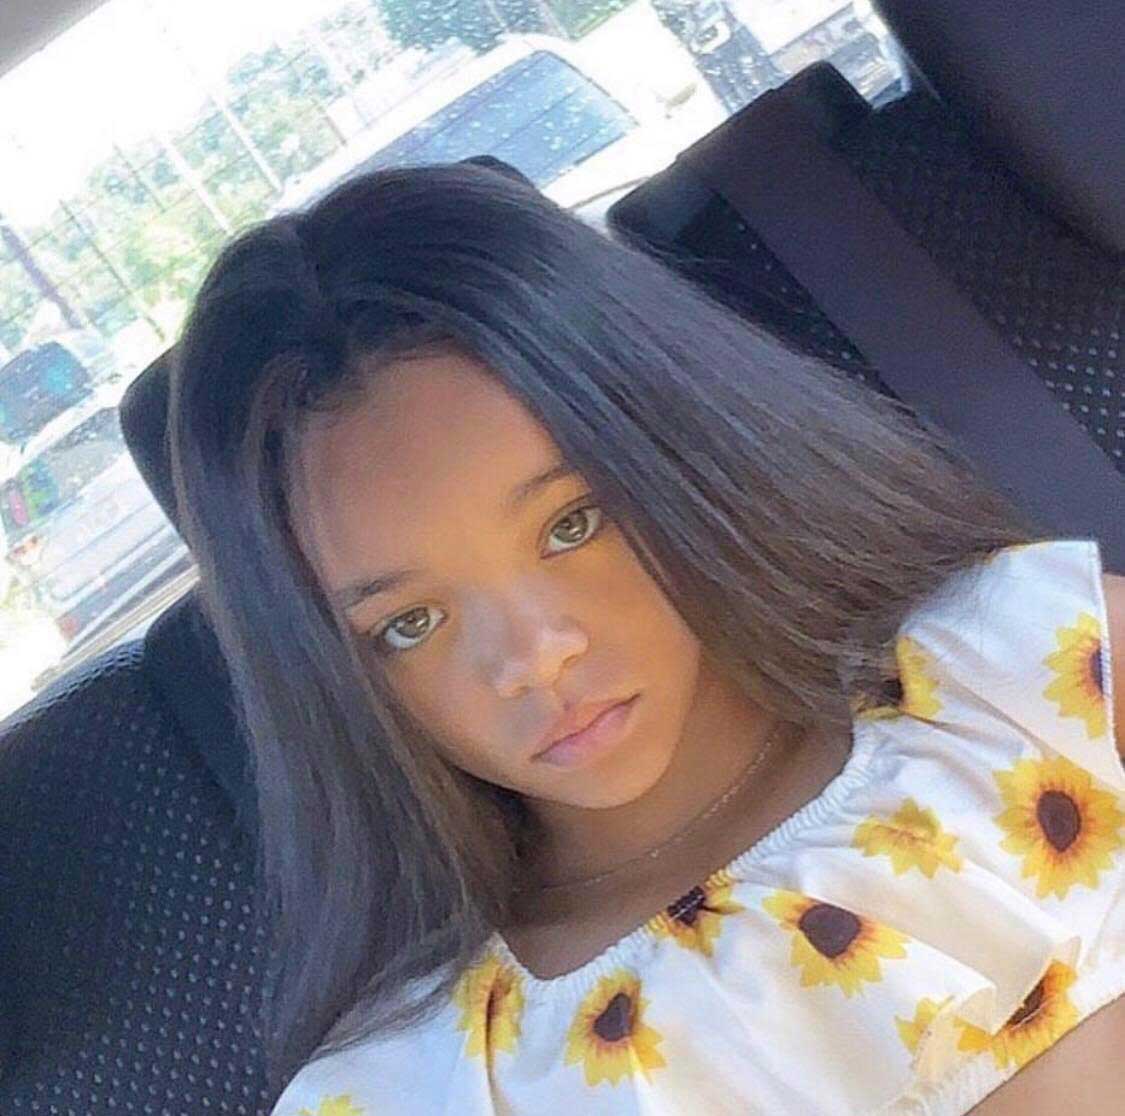 Rihannas Long Lost Twin Sister Found 